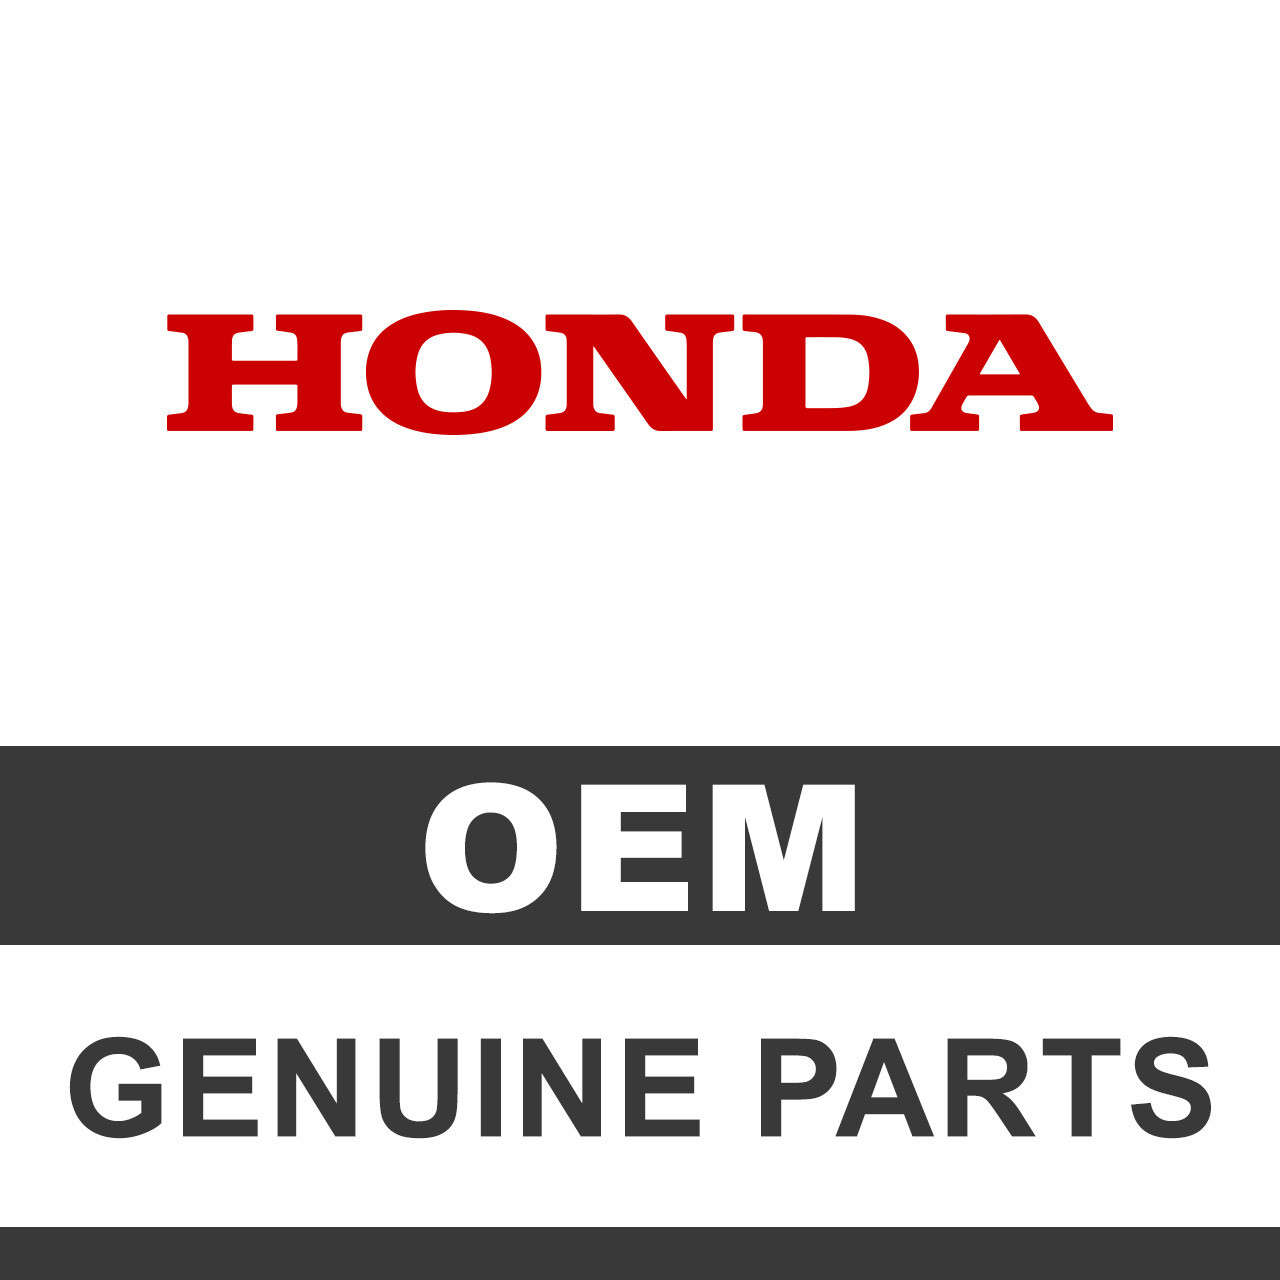 OEM Part Honda 92700-06035 Bolt Genuine Original Equipment Manufacturer 